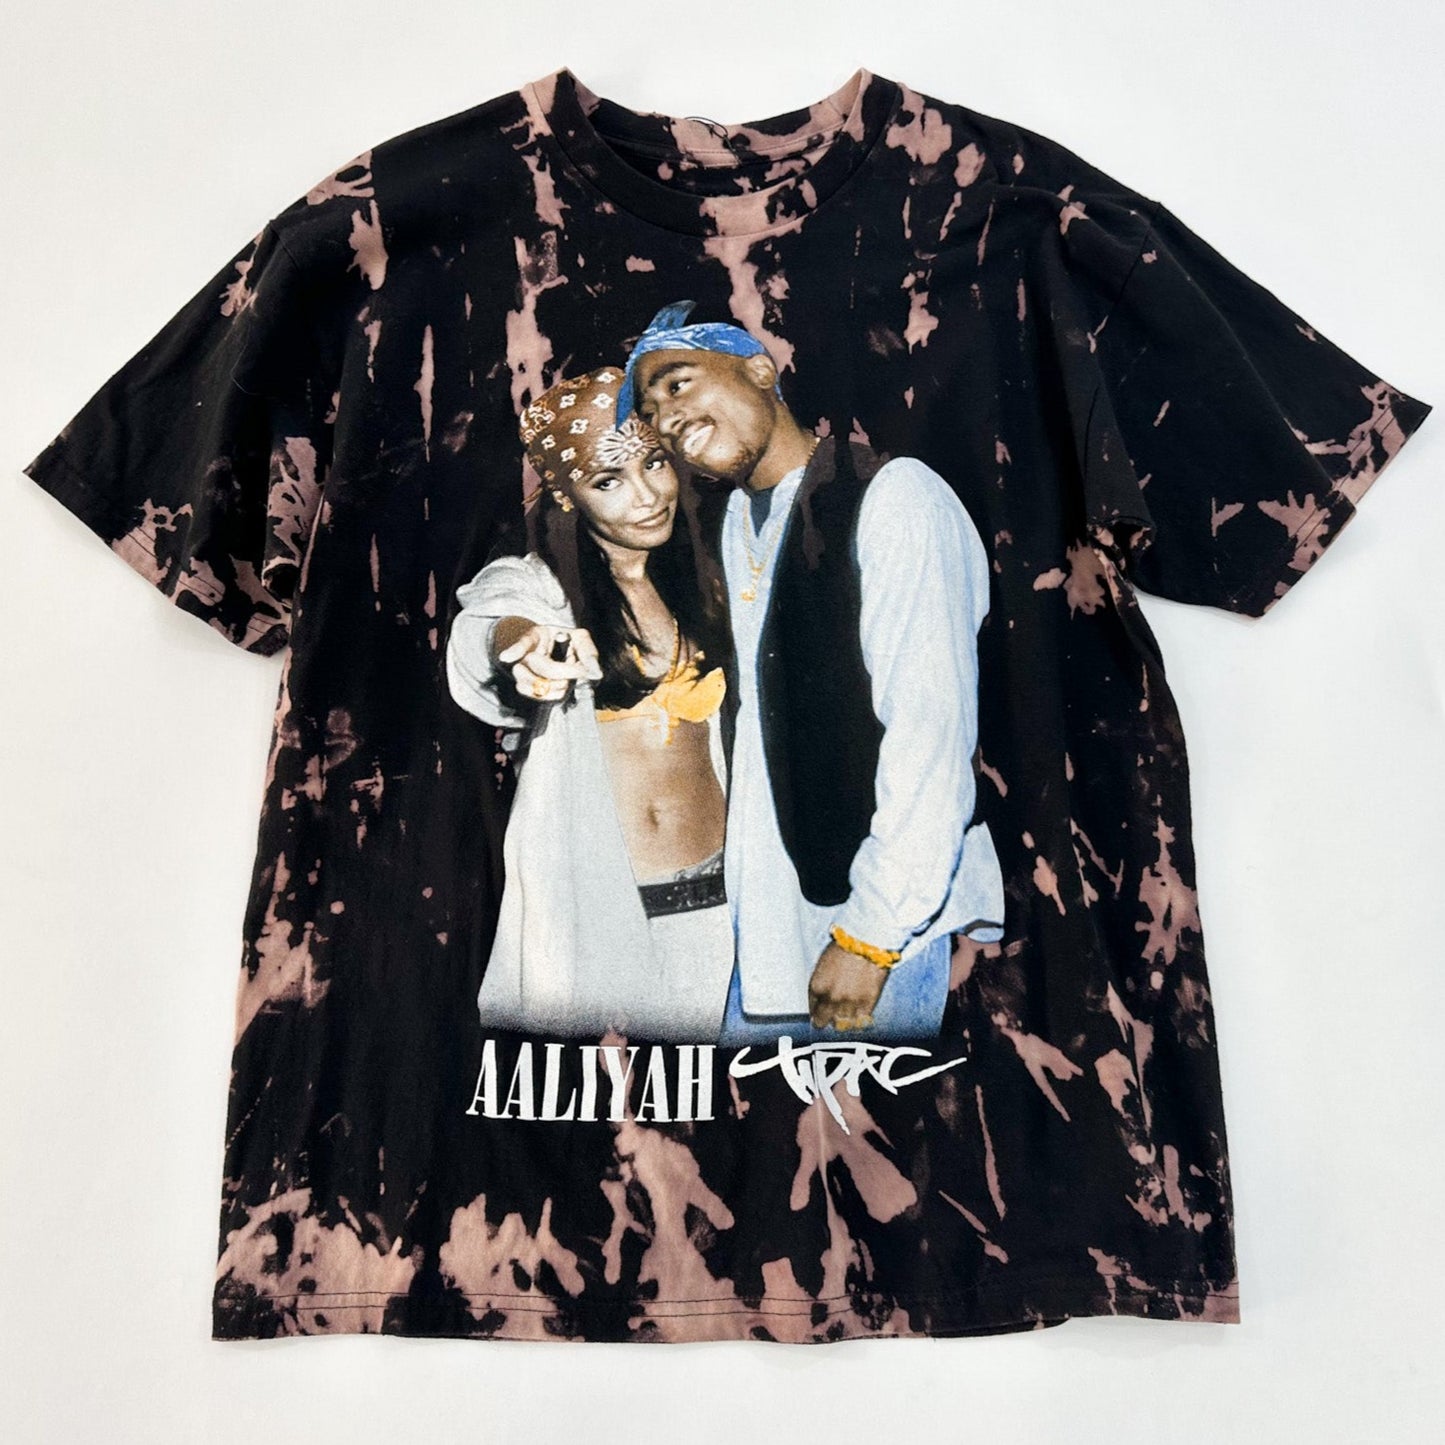 Tupac & Aaliyah Tie Dye Tee